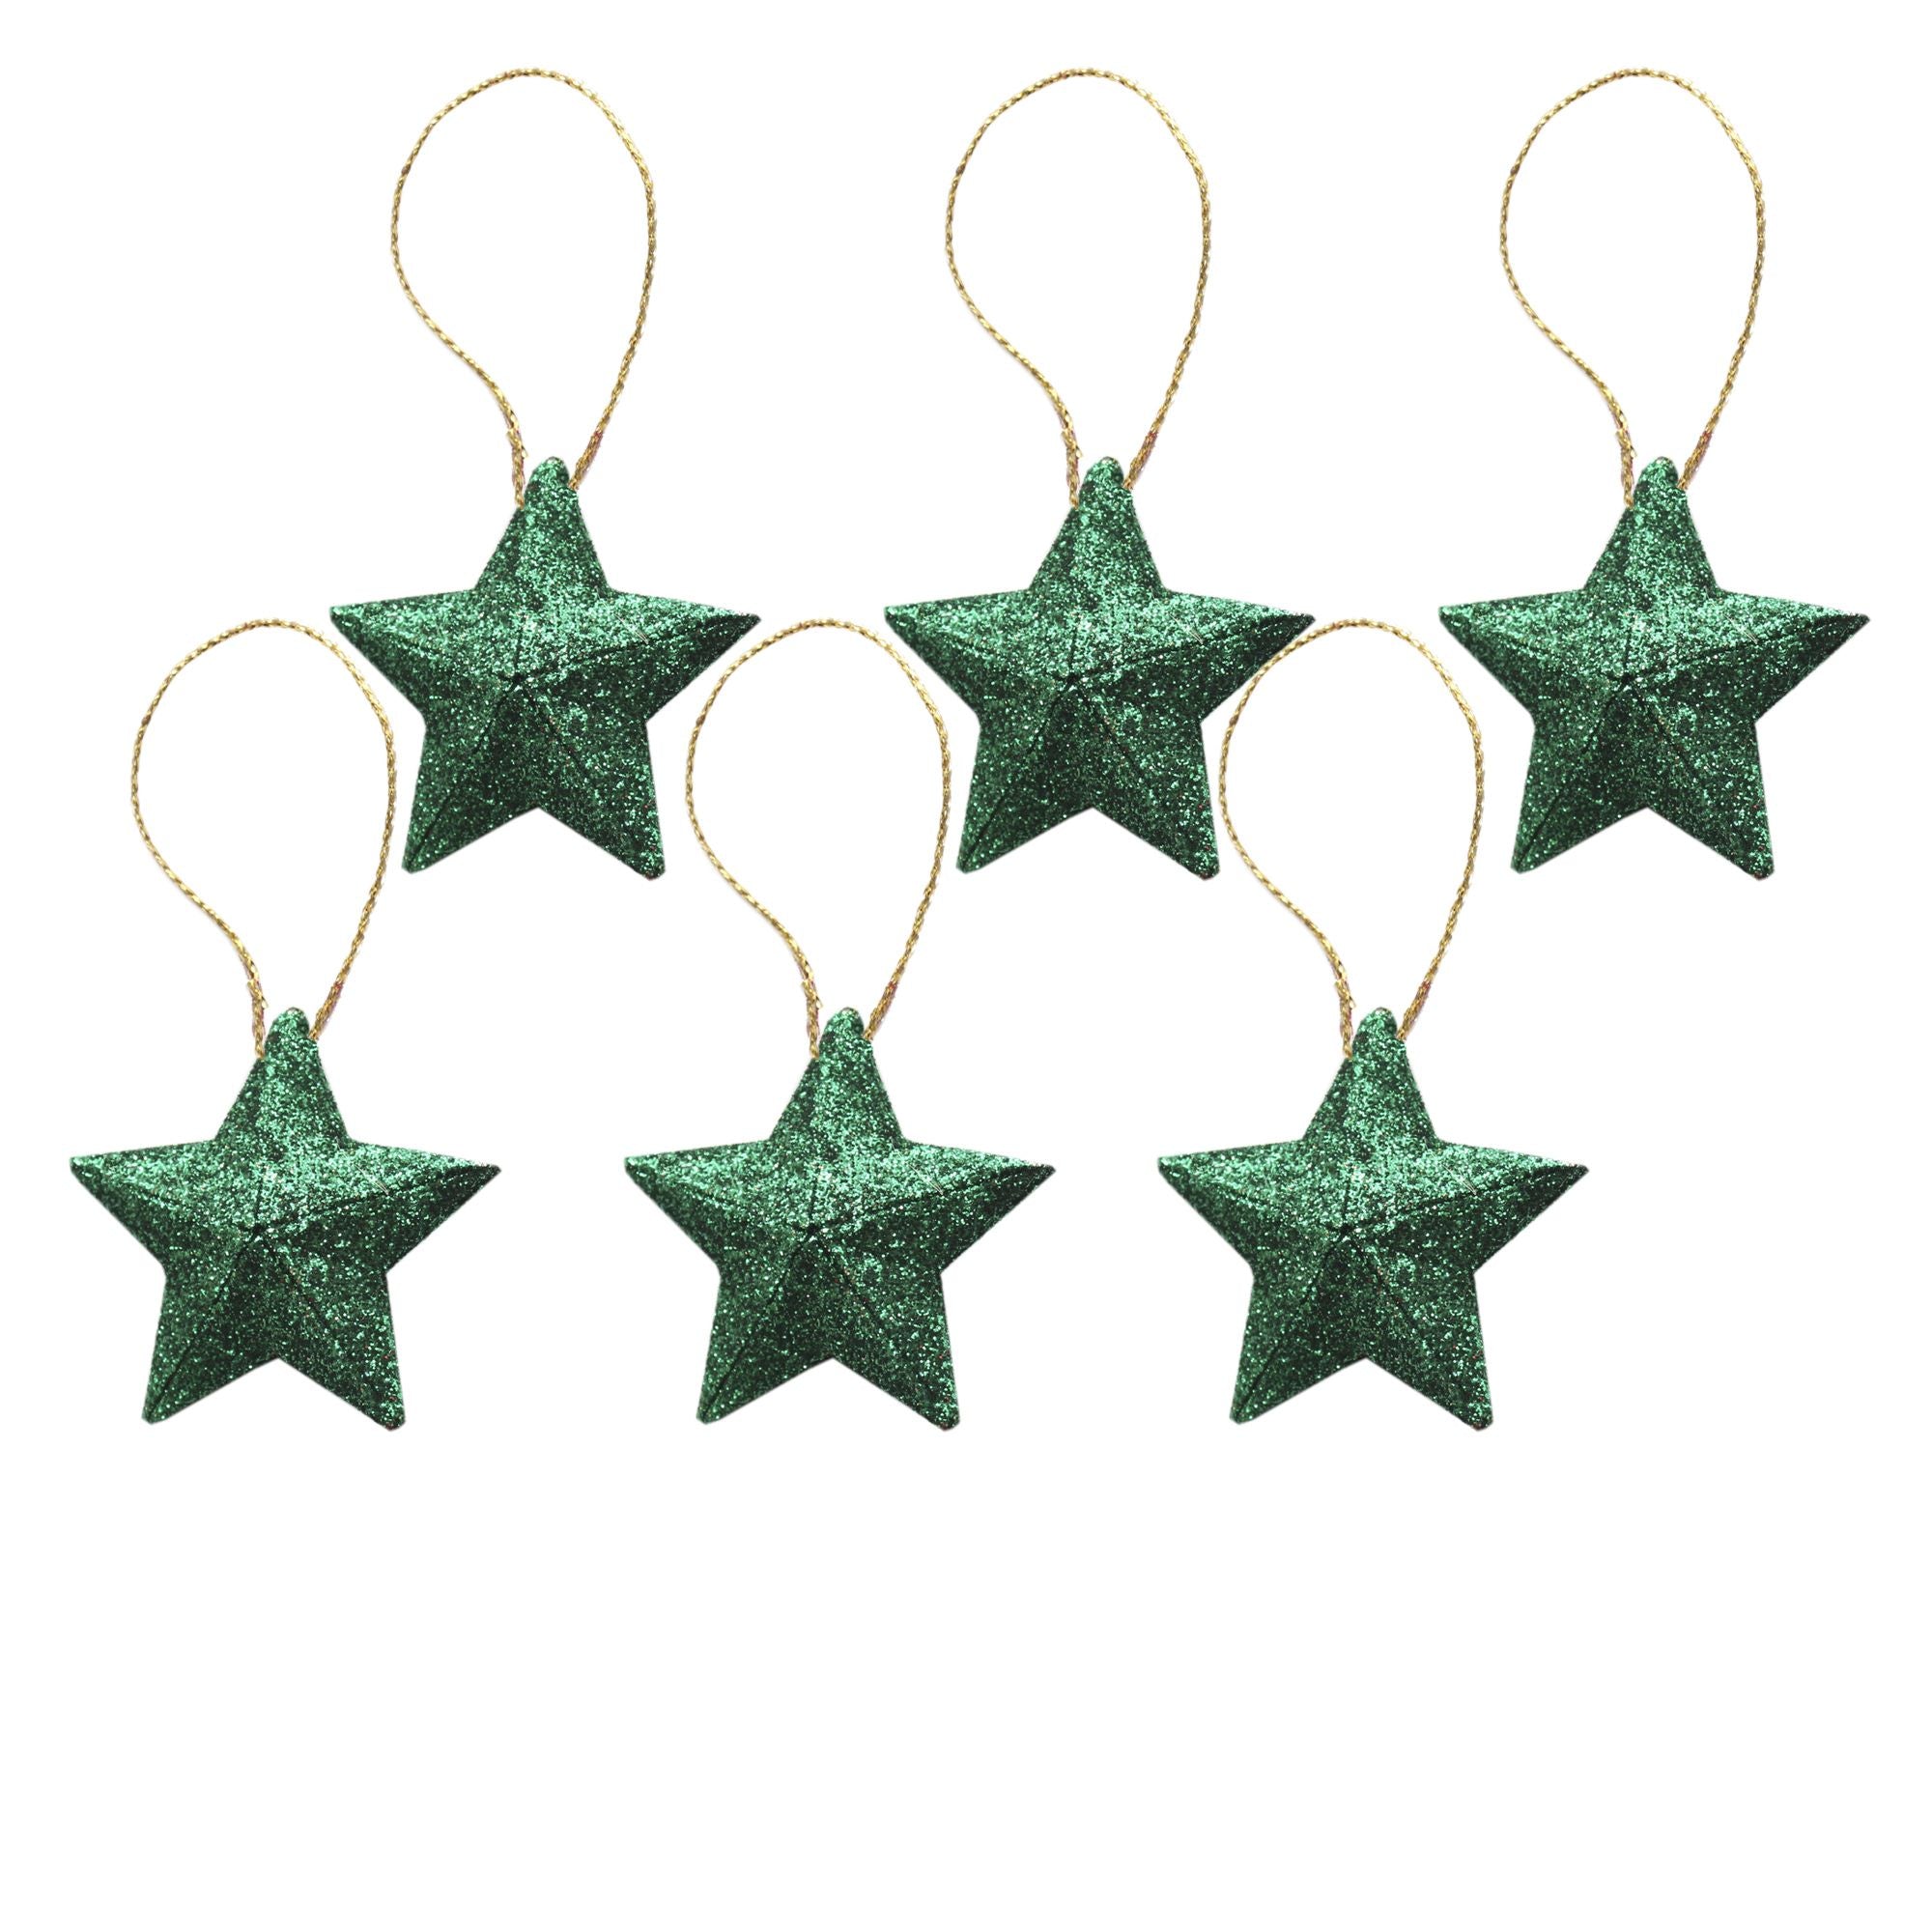 Handmade Christmas Ornaments - 3D Glitter Stars, 2.5inch, Green, 6pc